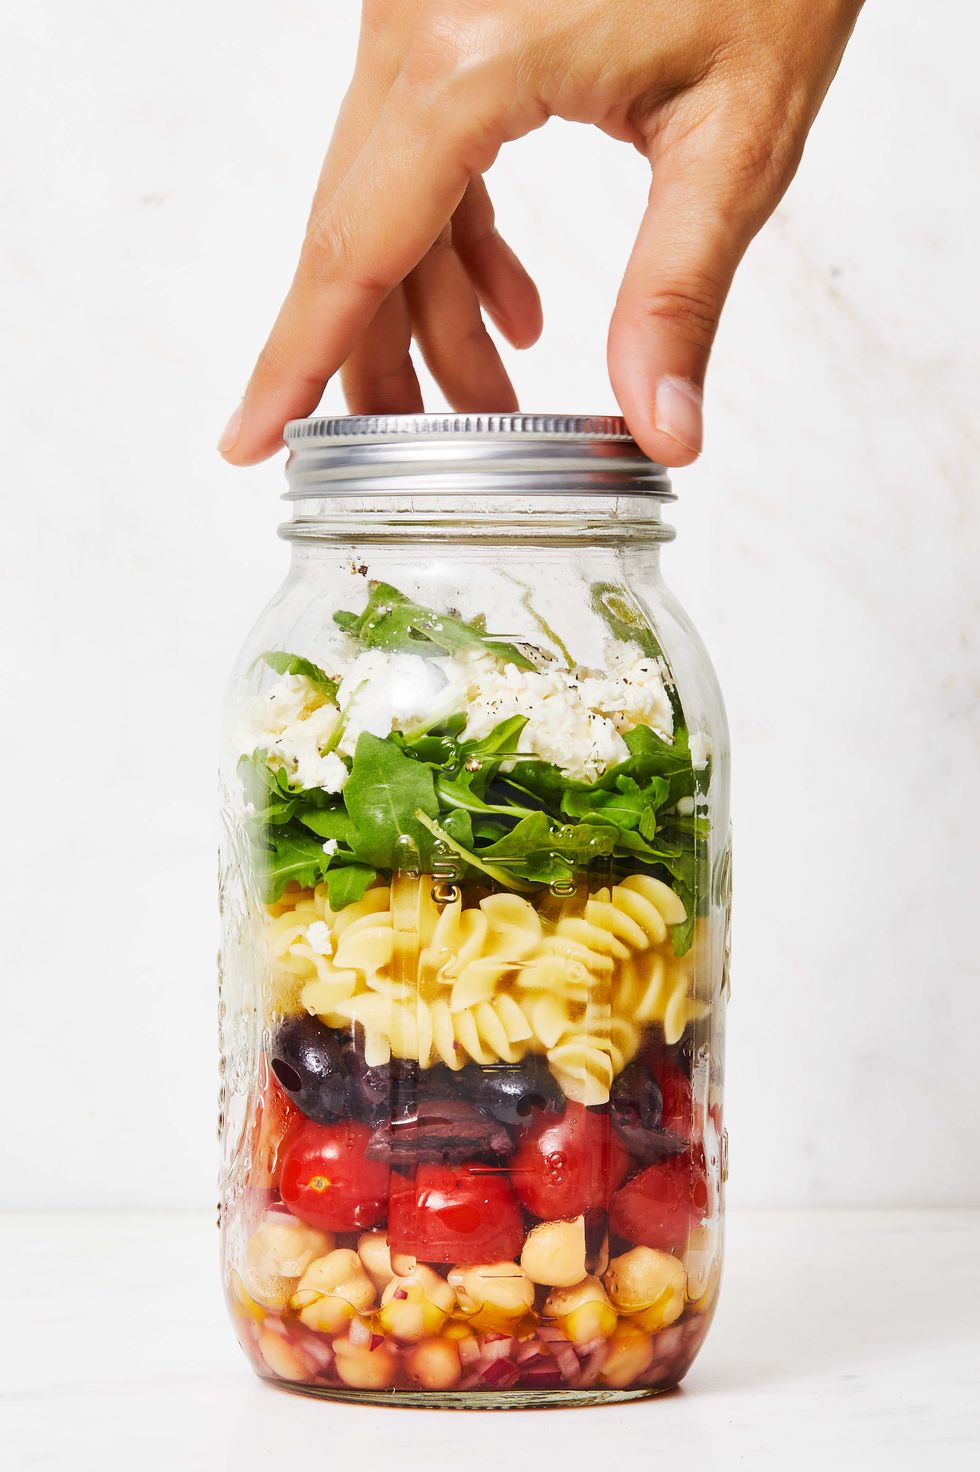 chickpea pasta salad in a jar